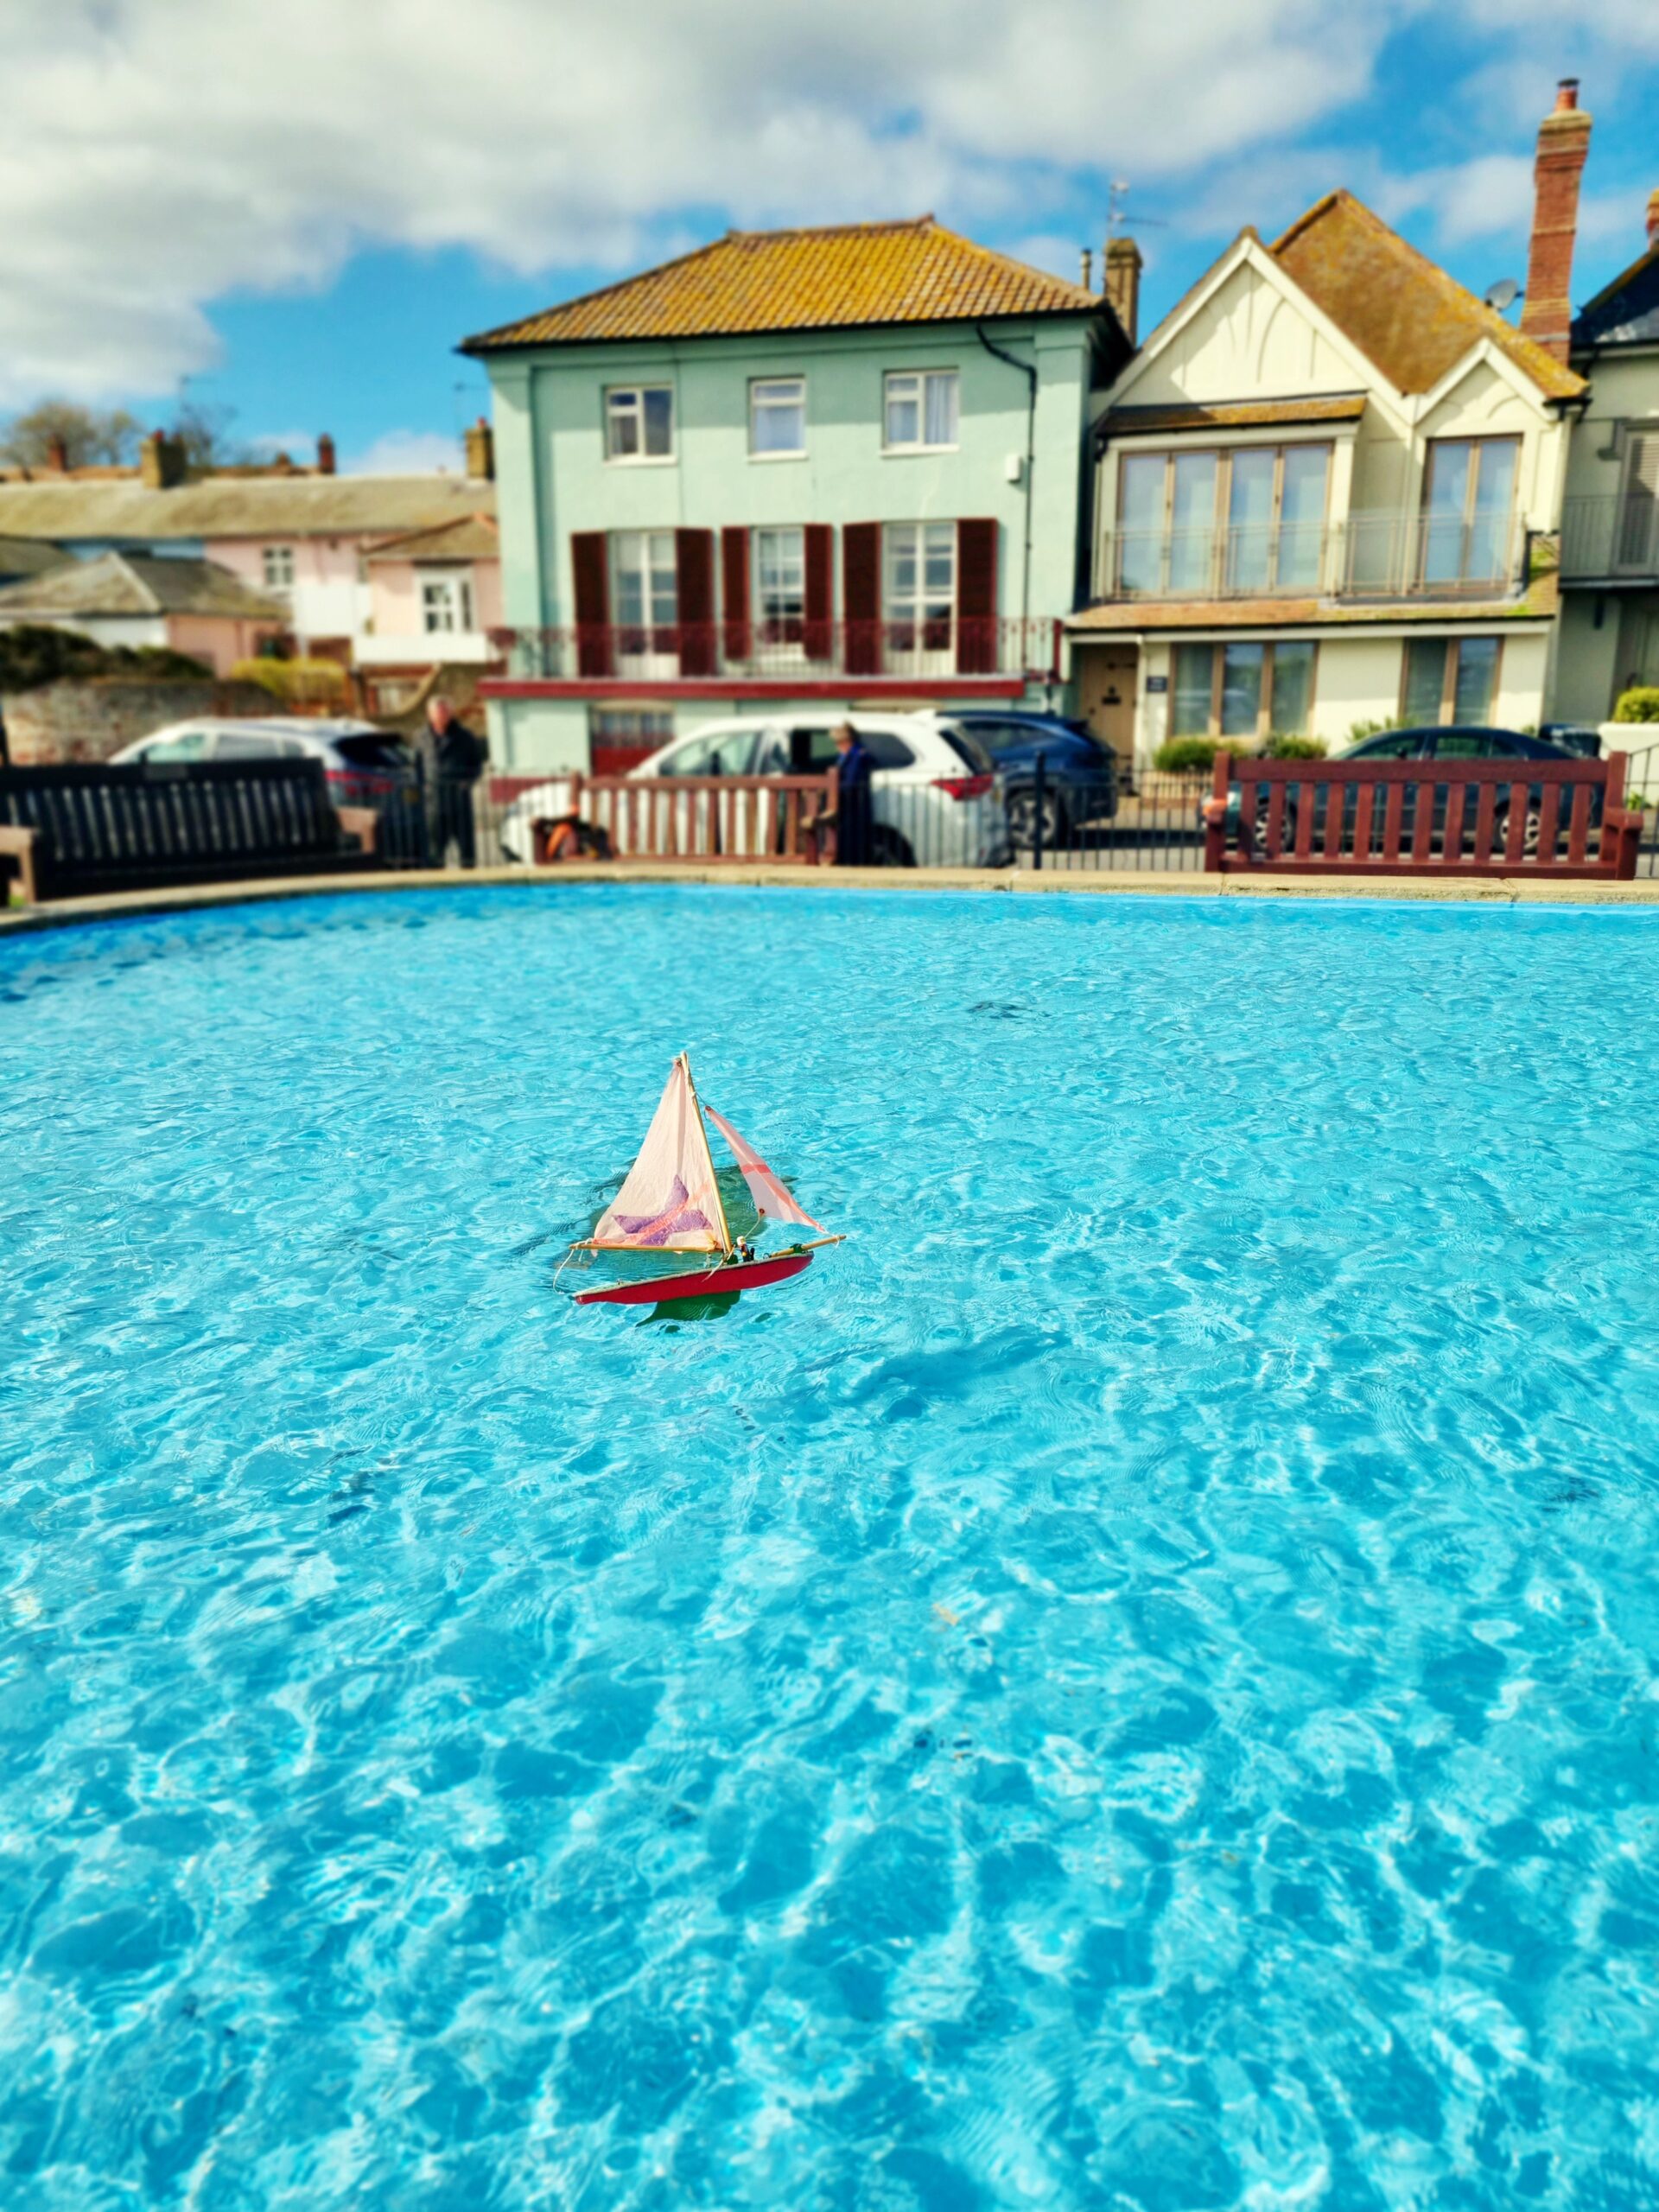 <img src="toy.jpg" alt="toy boating pool Aldeburgh"/>